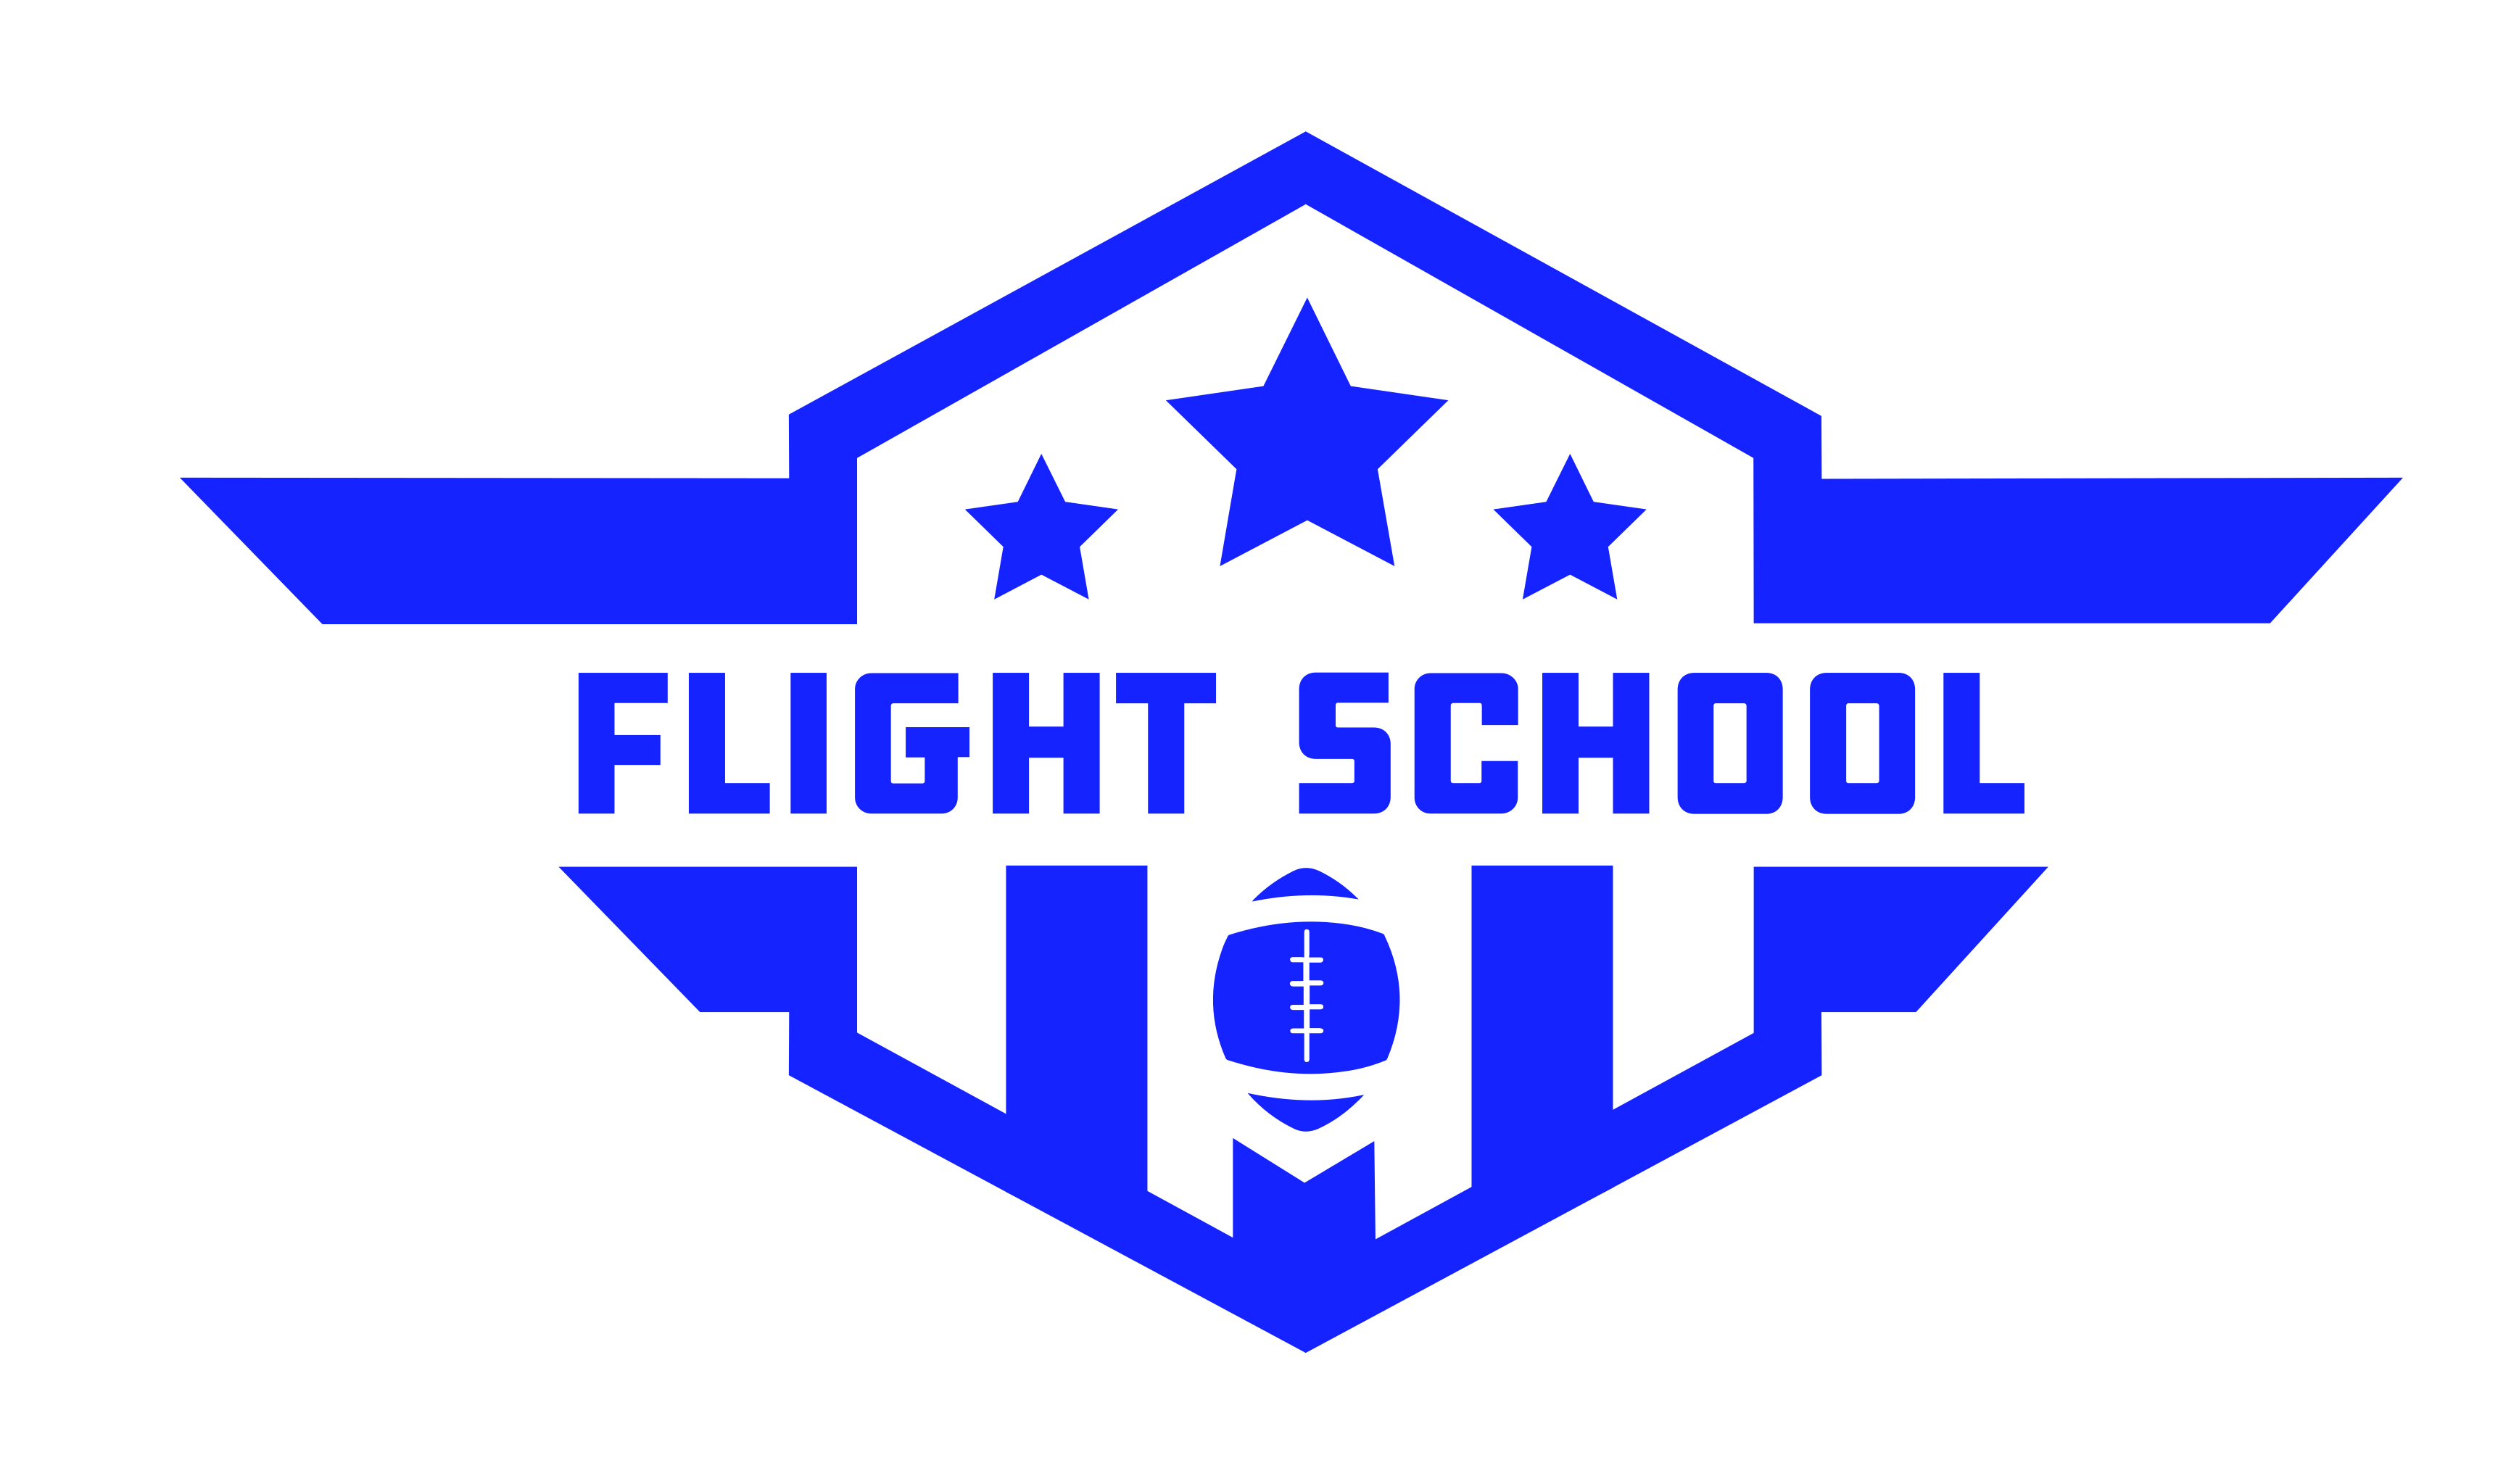 flightschoolfootball